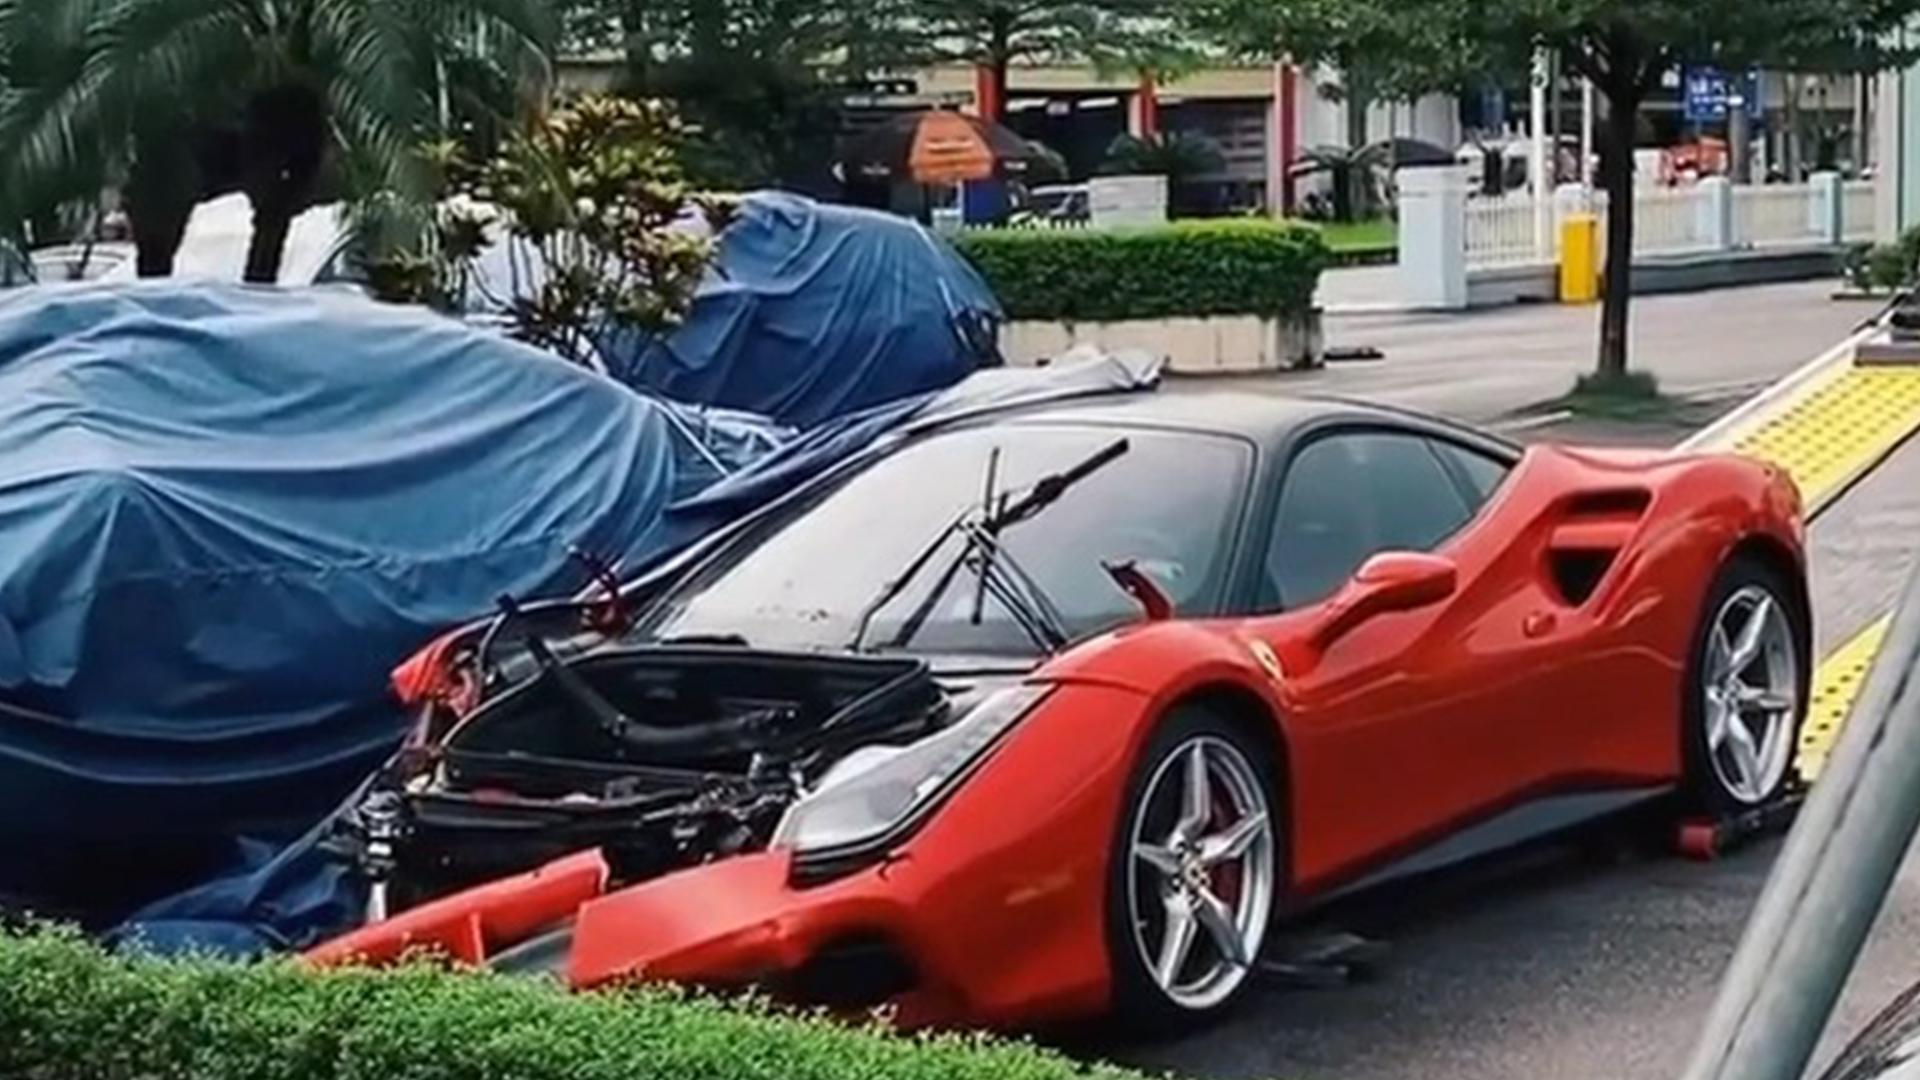 Siêu xe Ferrari đâm gốc cây